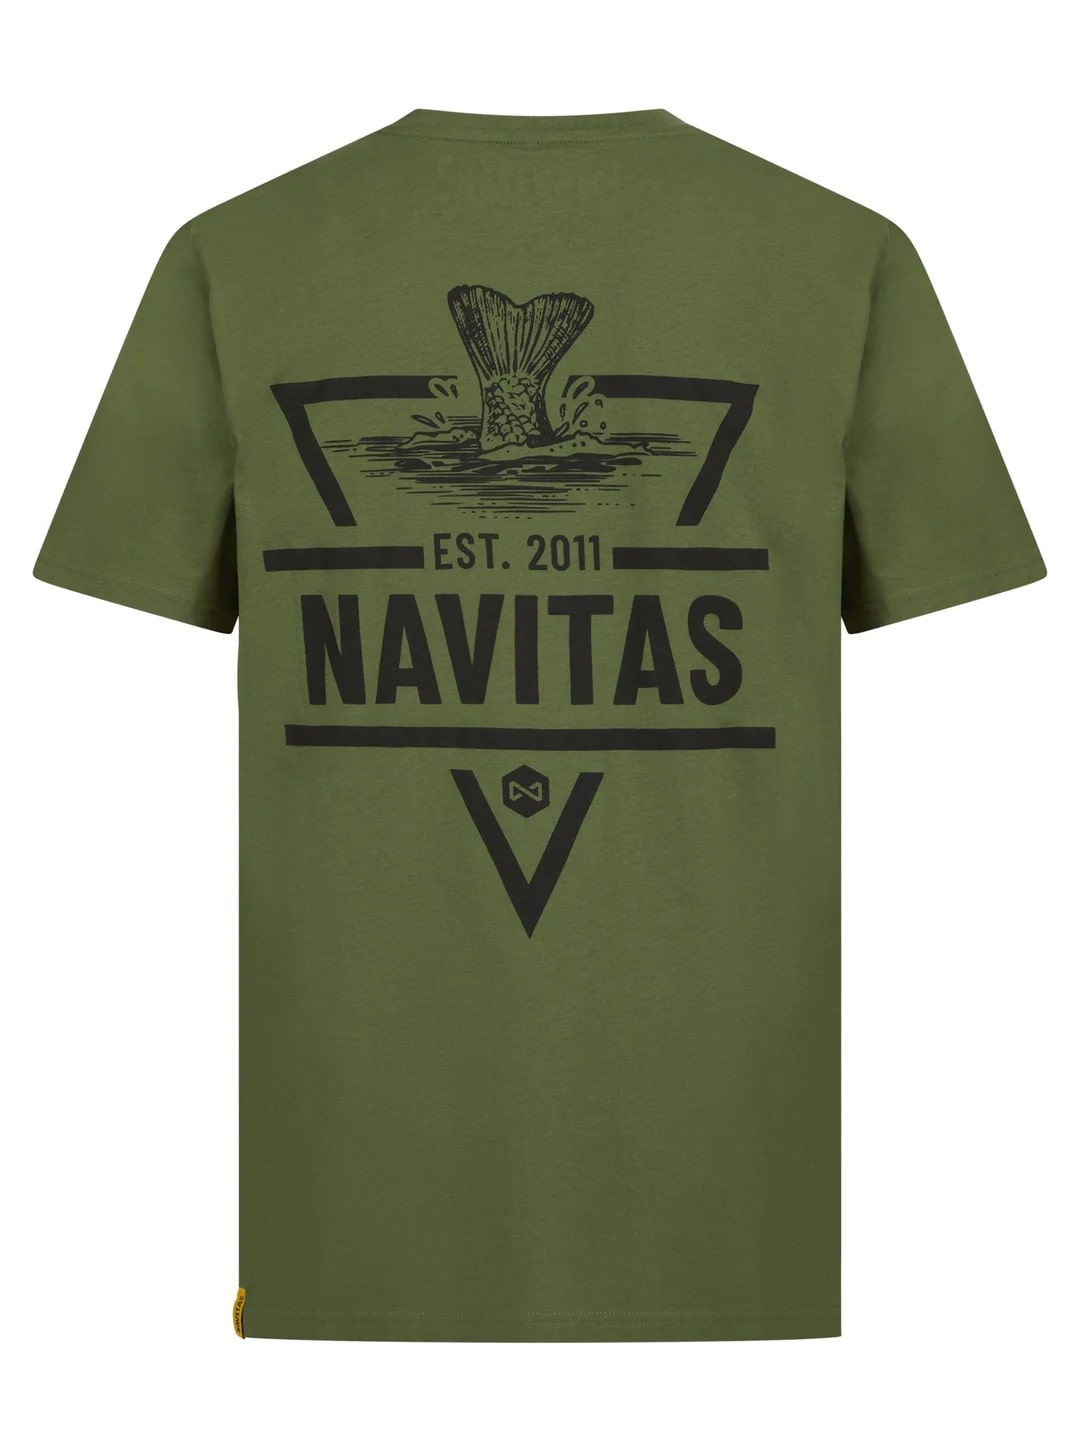 Koszulka Wędkarska Navitas Diving Tee Shirt